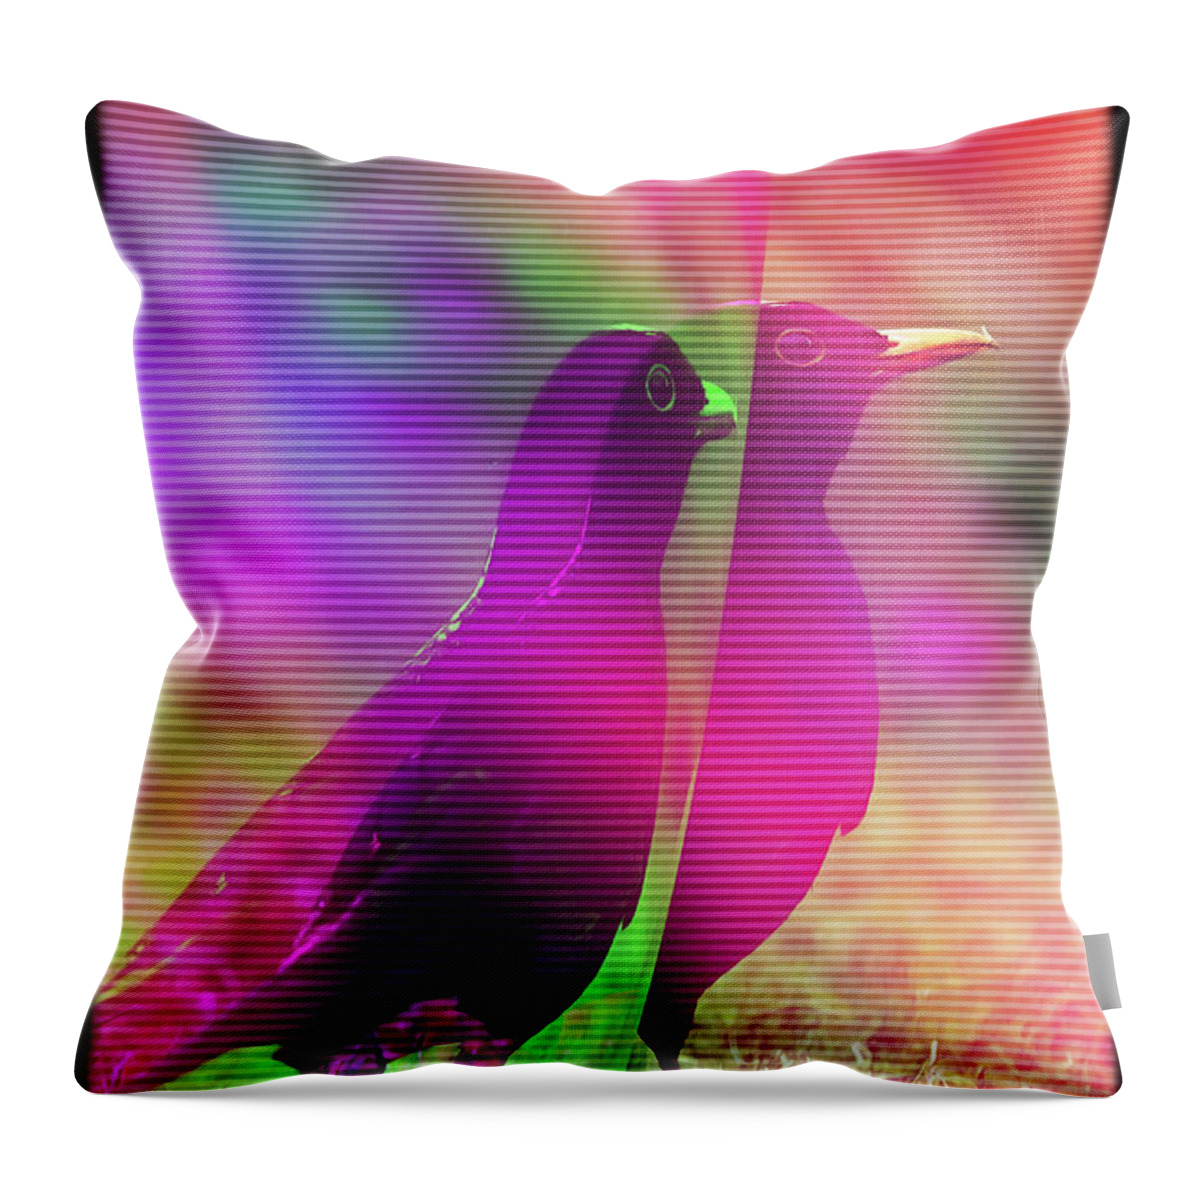 Glitch Throw Pillow featuring the digital art Blackbird trippy Glitch Art by Matthias Hauser